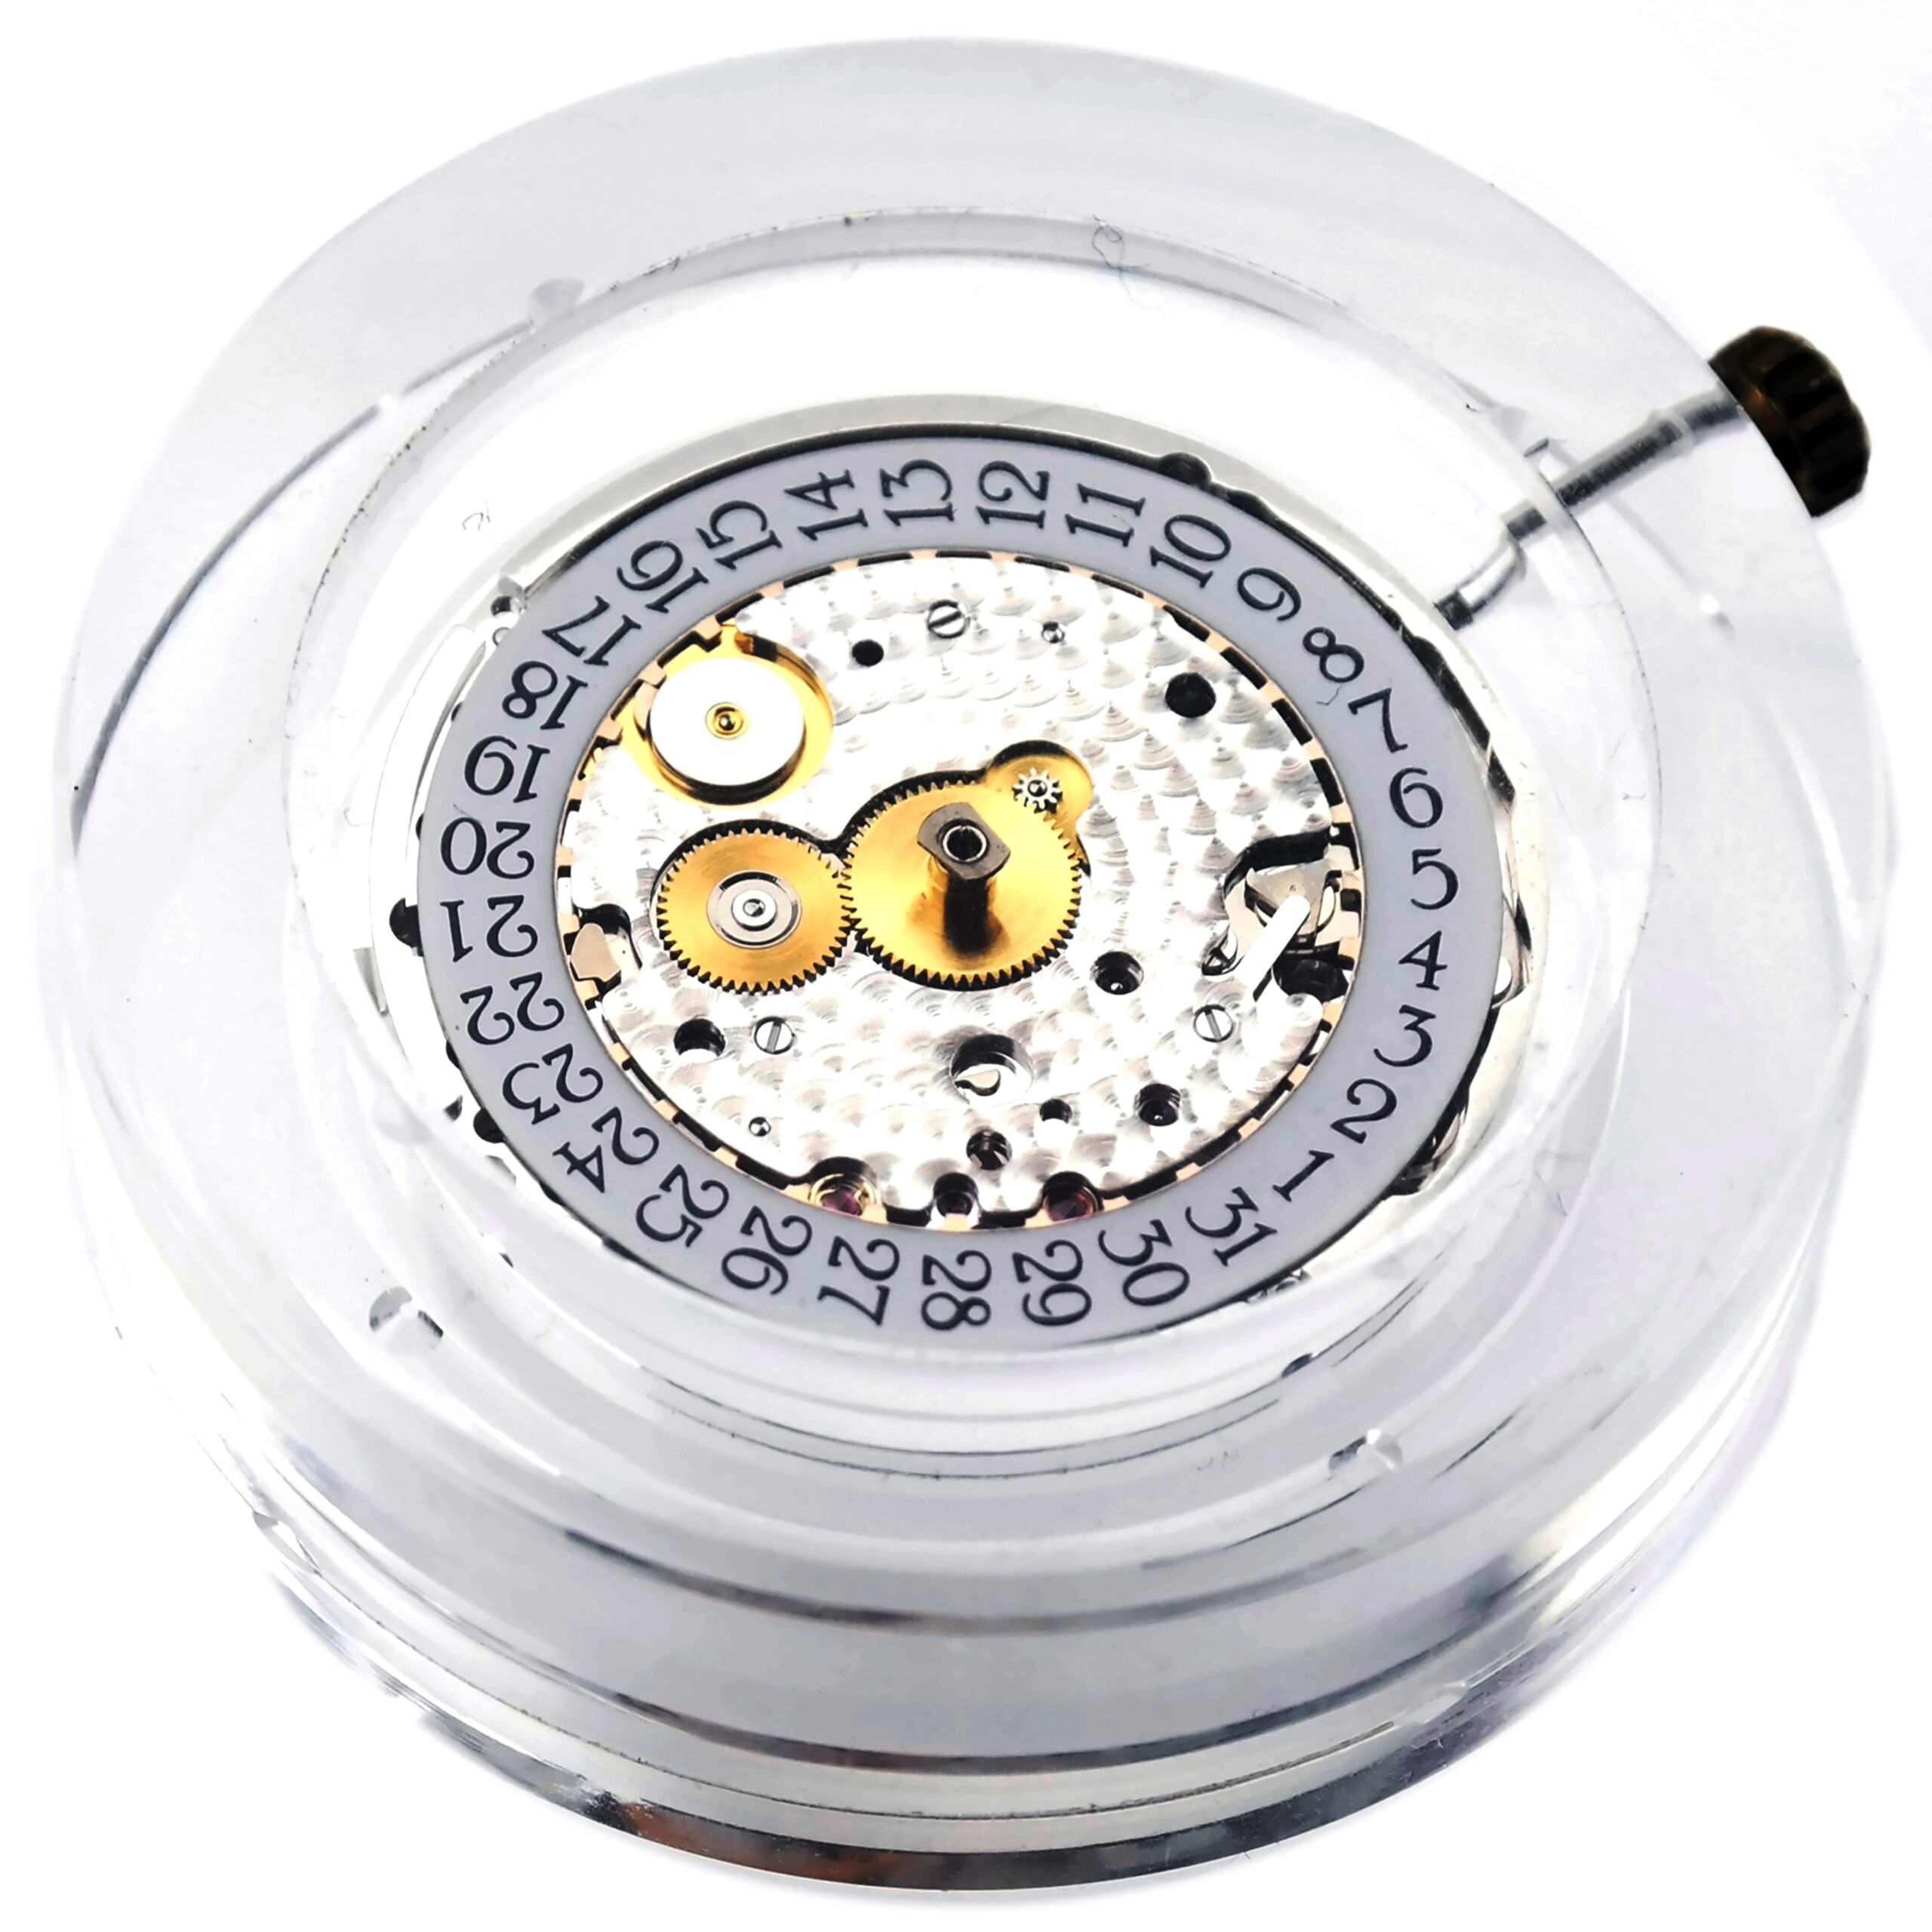 chopard automatic chronometer watch movement calibre fe 001